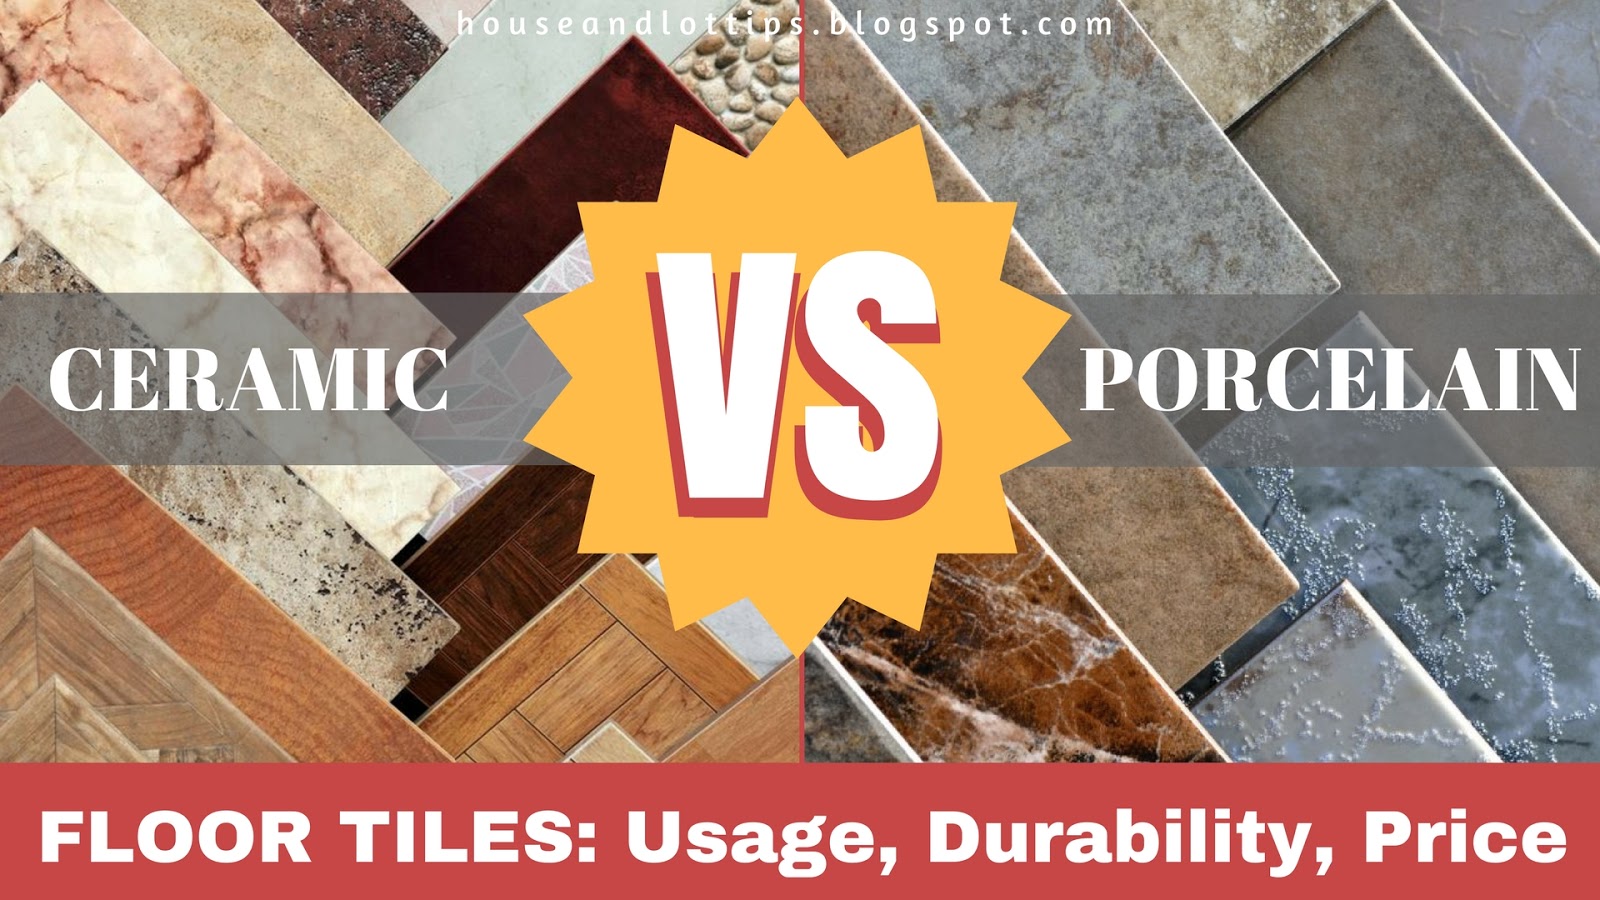  Ceramic  vs  Porcelain  Floor  Tiles  Usage Durability Price 